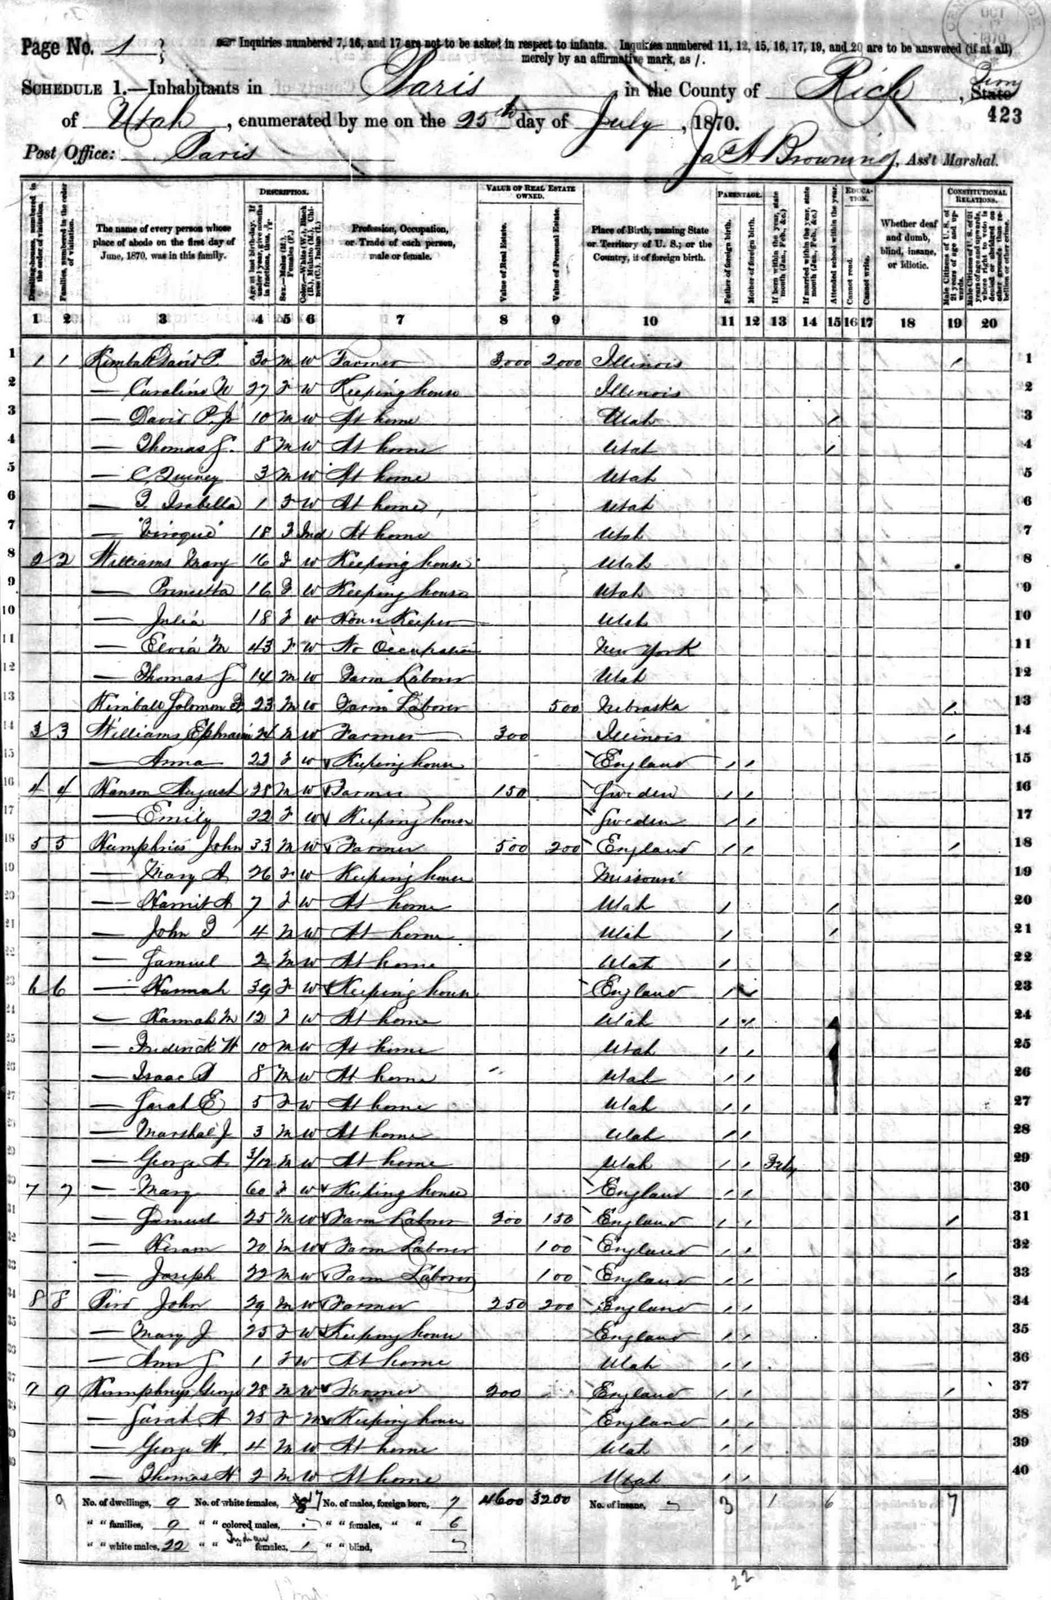 [Isaac+Brough+Law+-+1870+Census+-+Utah+Territory+-+Rich+county+-+Paris+-+page+1.jpg]